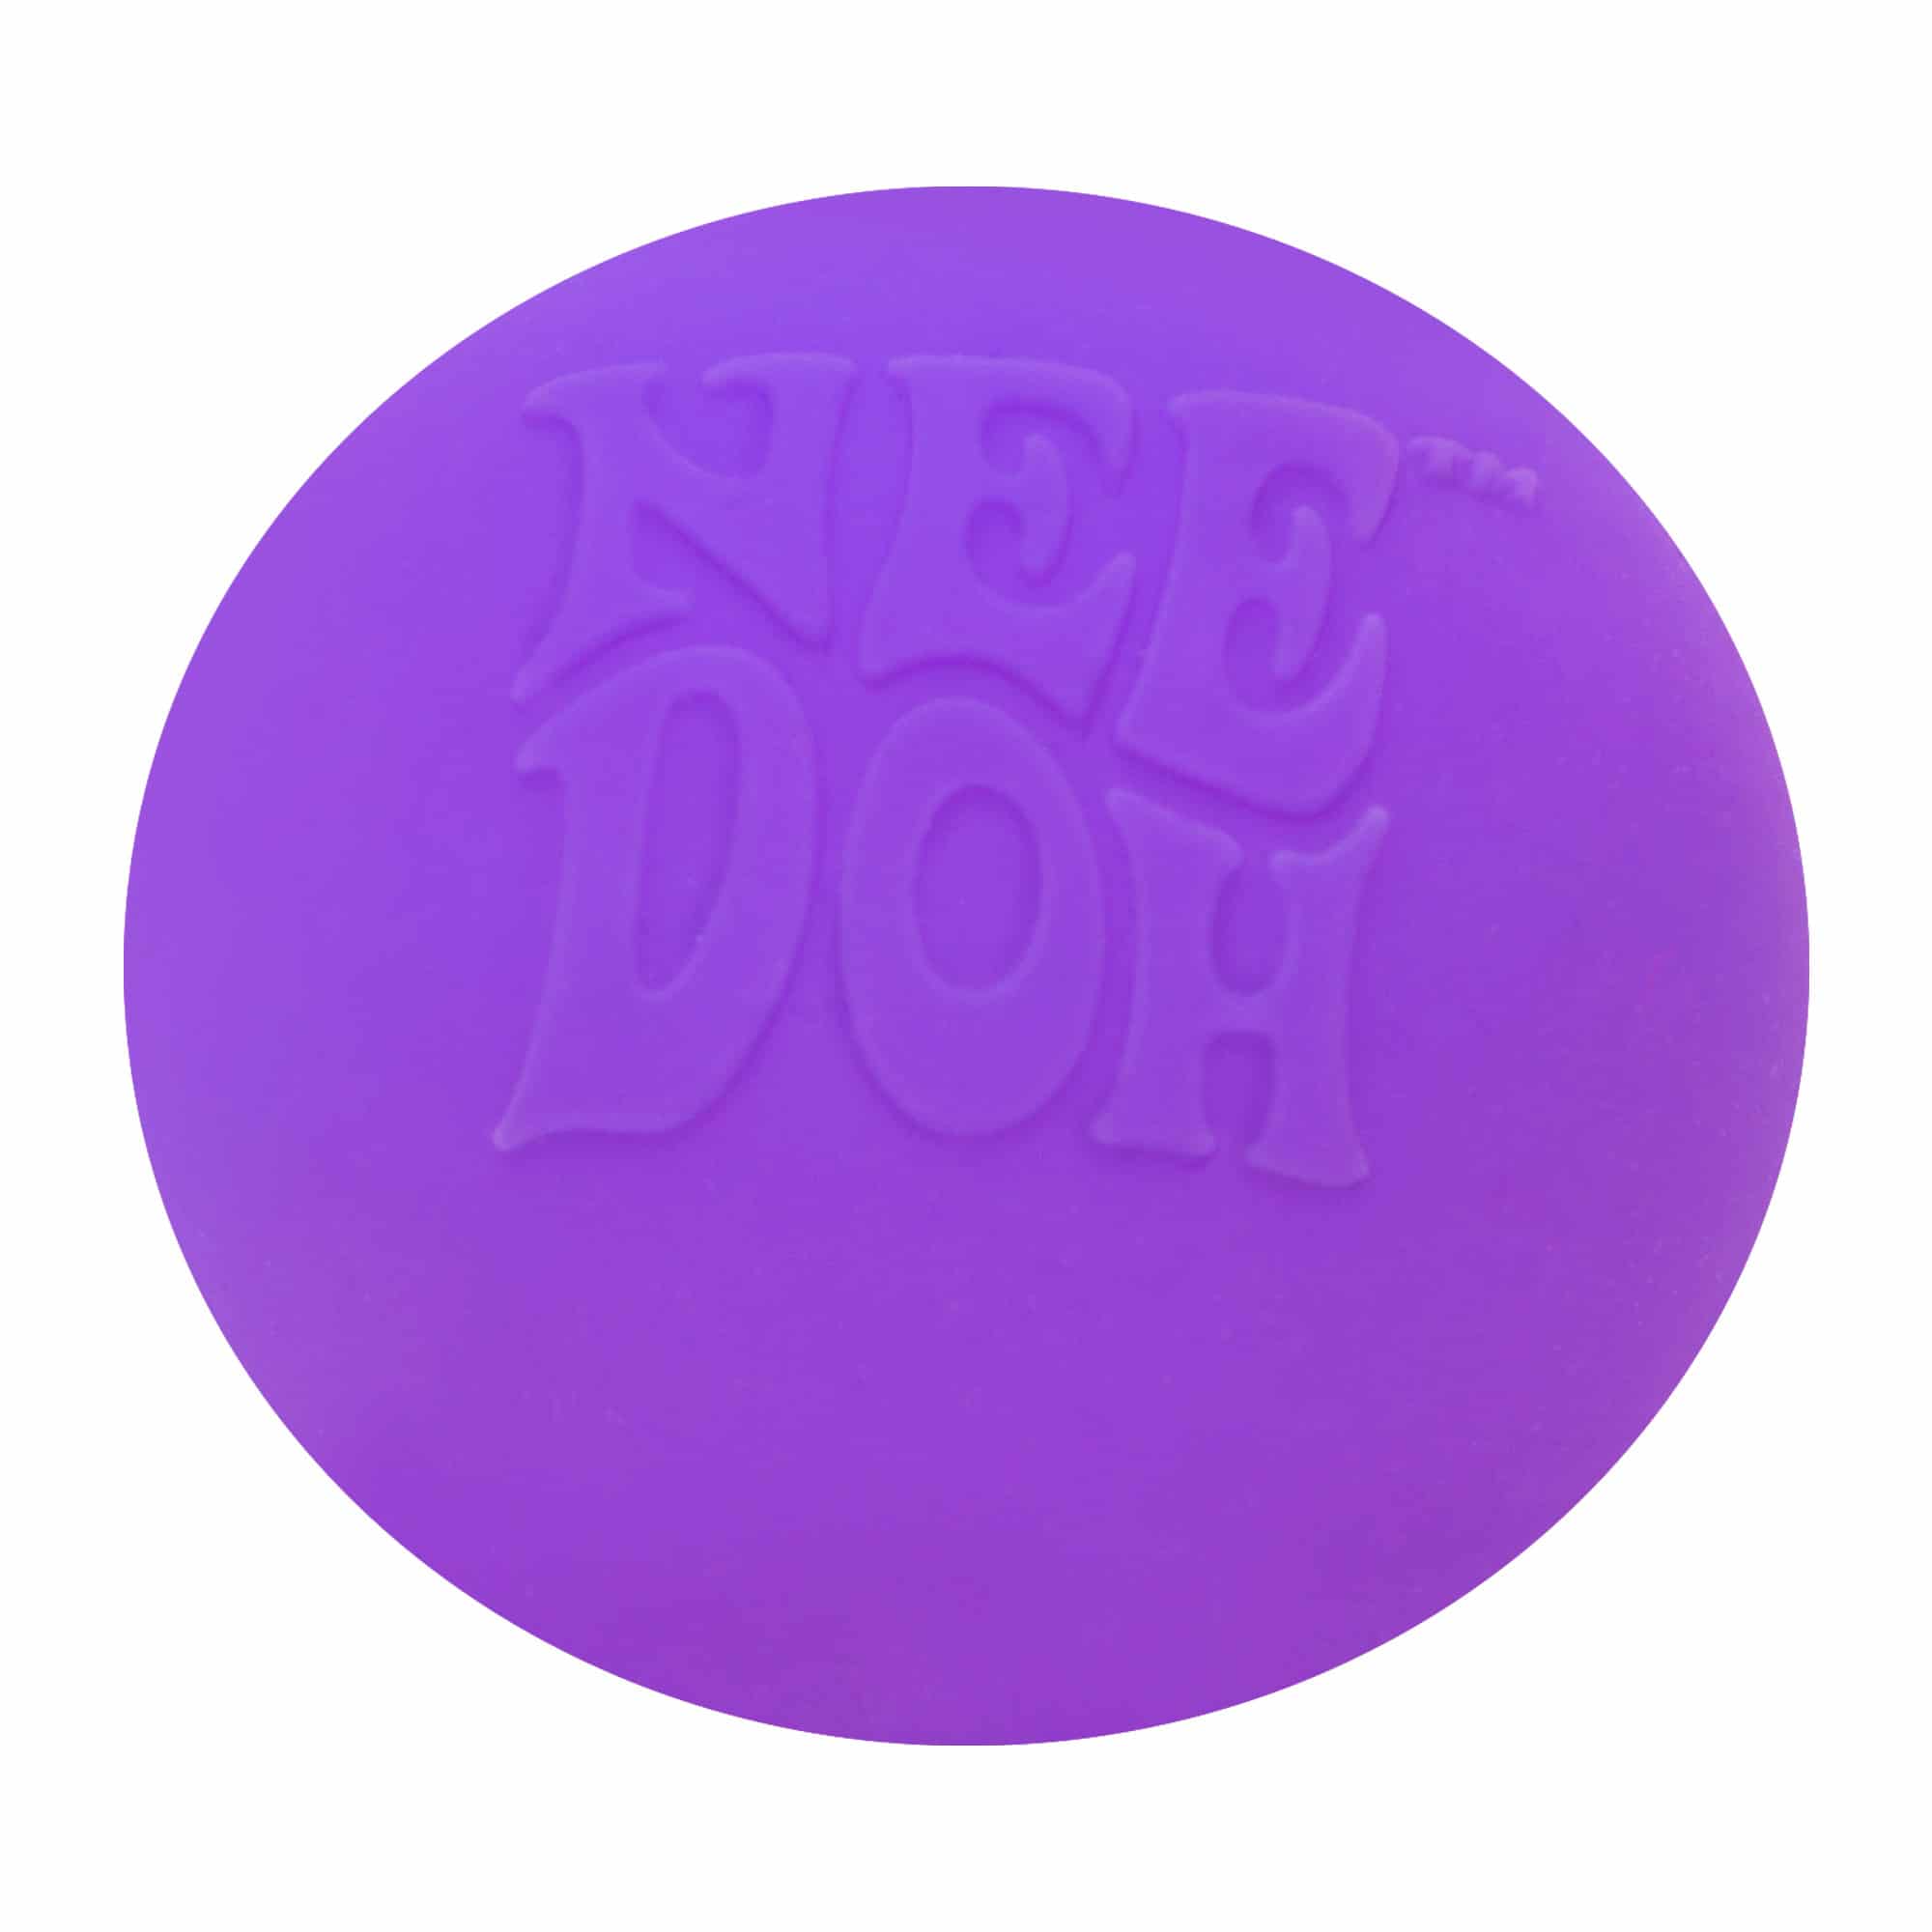 The purple Nee Doh ball.